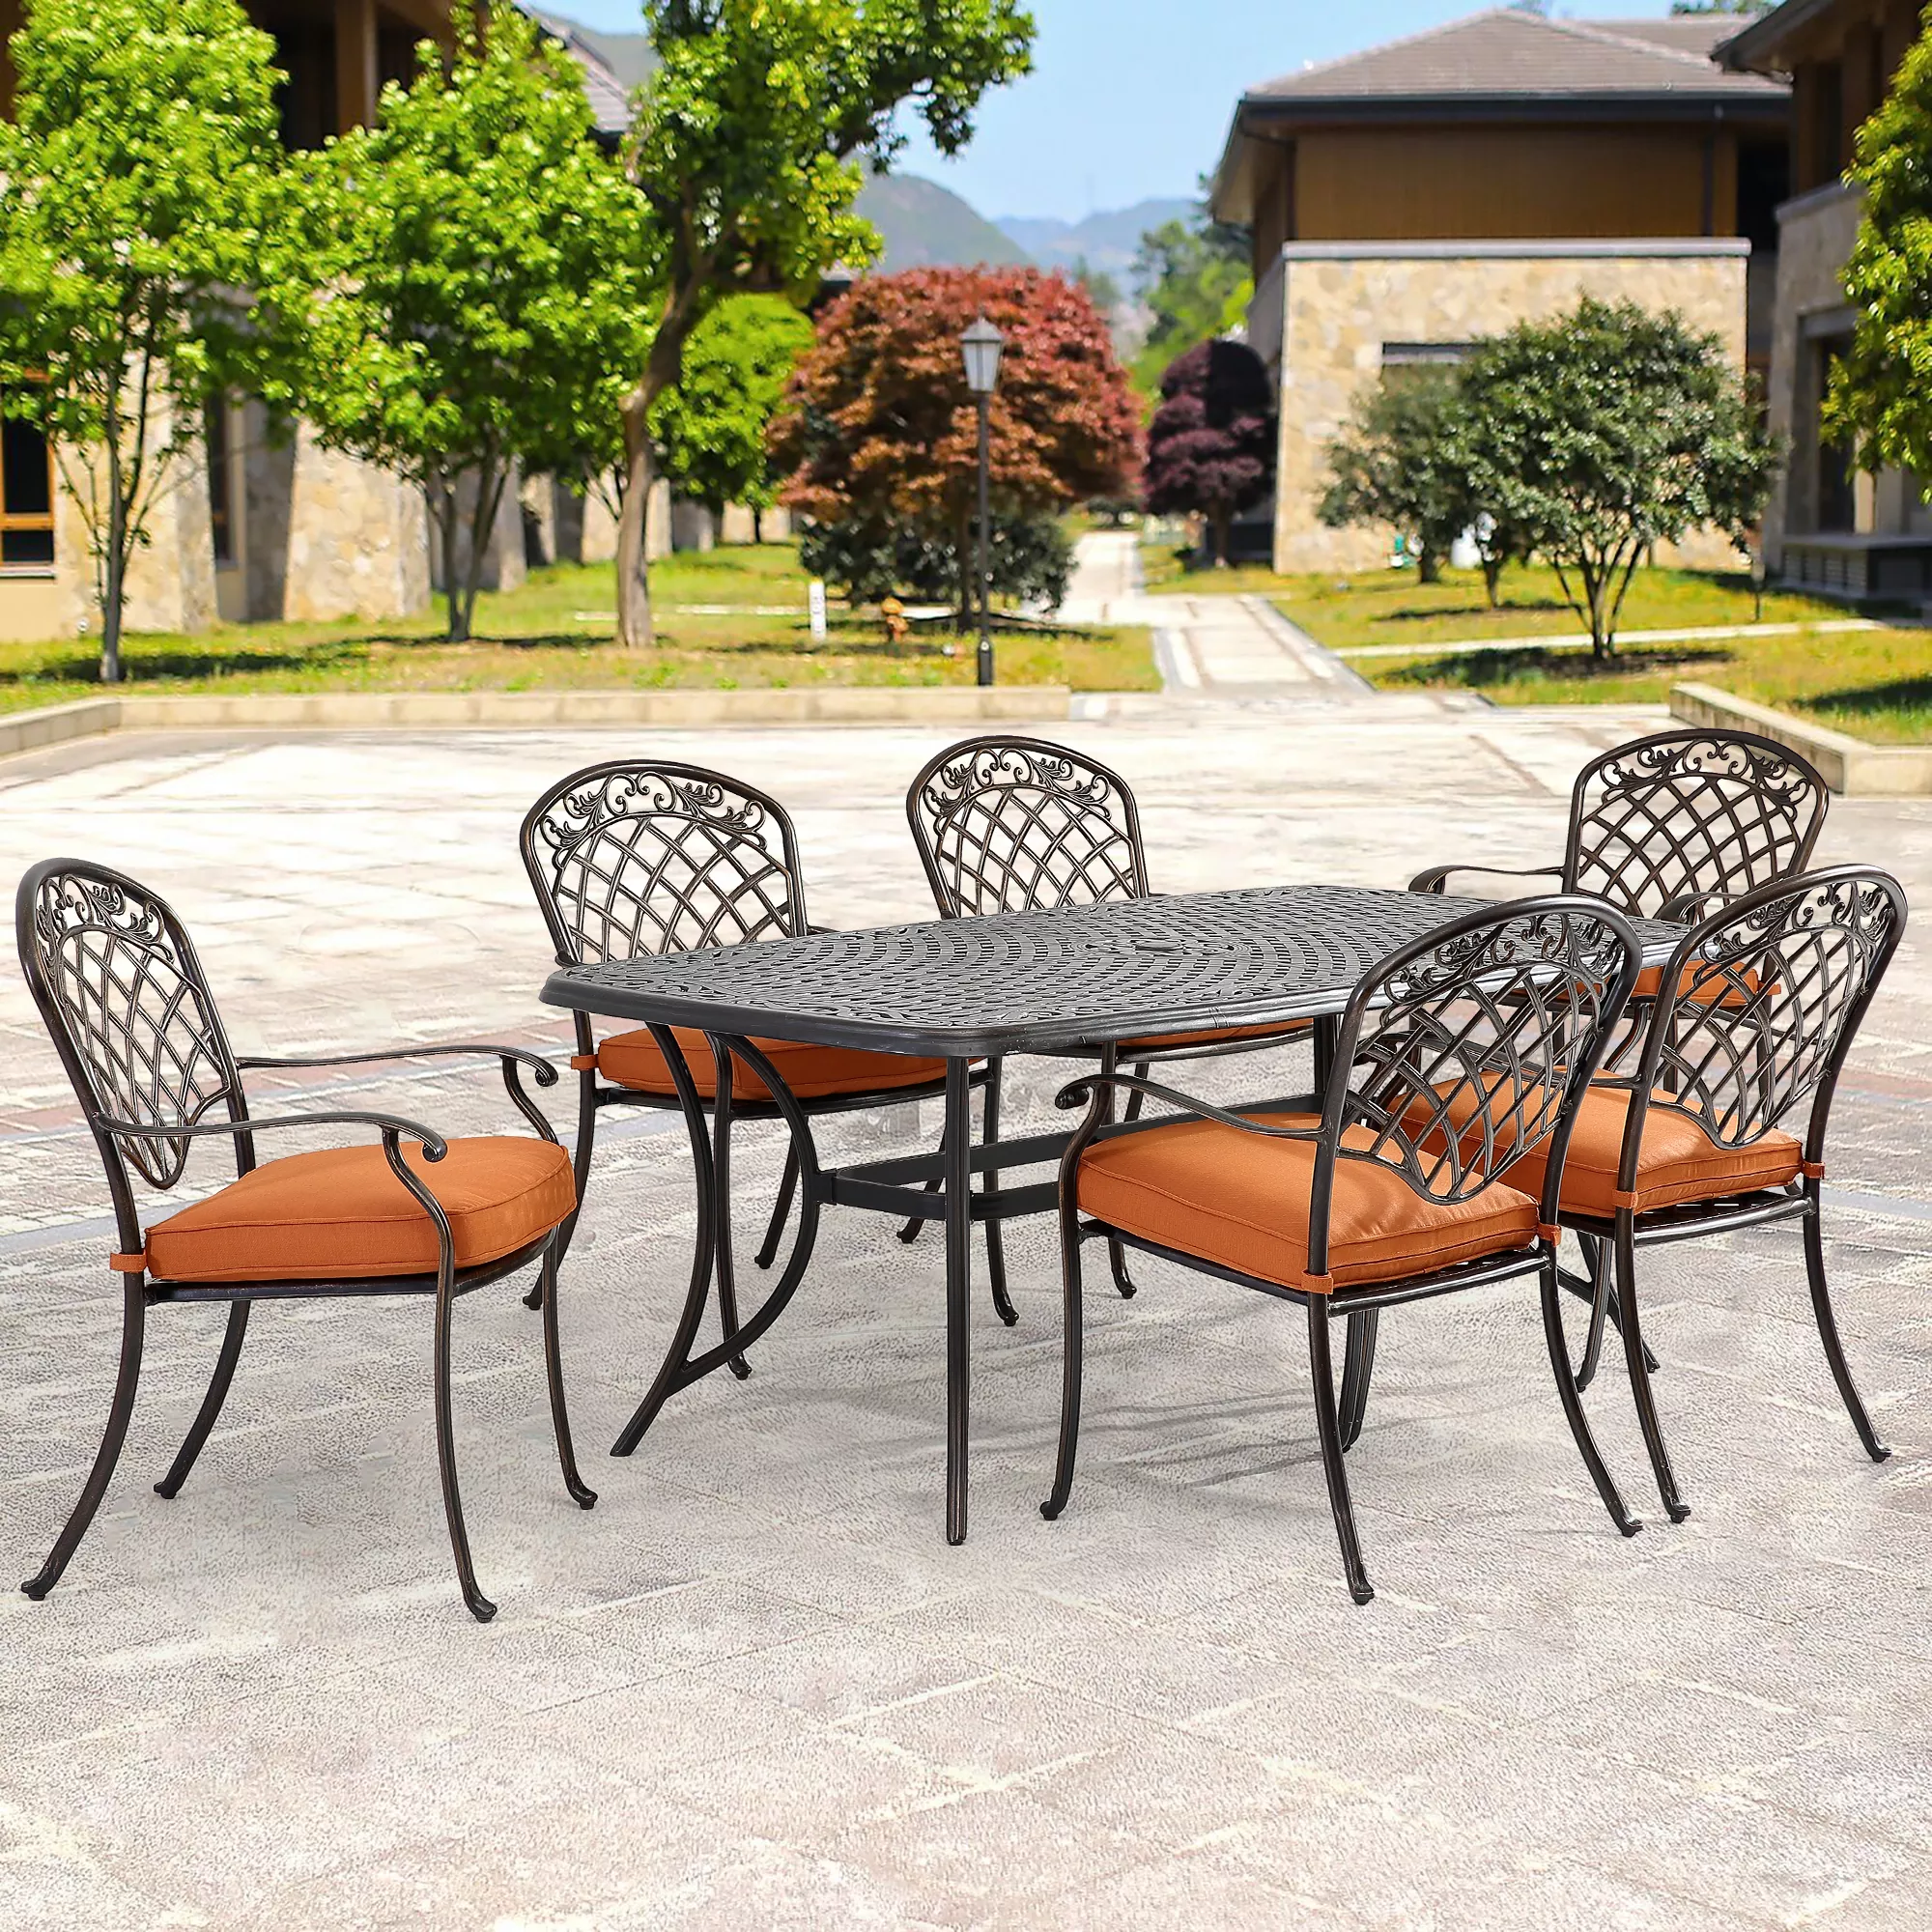 Mondawe 6-Piece Cast Aluminum Diagonal-Mesh Vines Backrest Dining Chairs in Beige/Orange